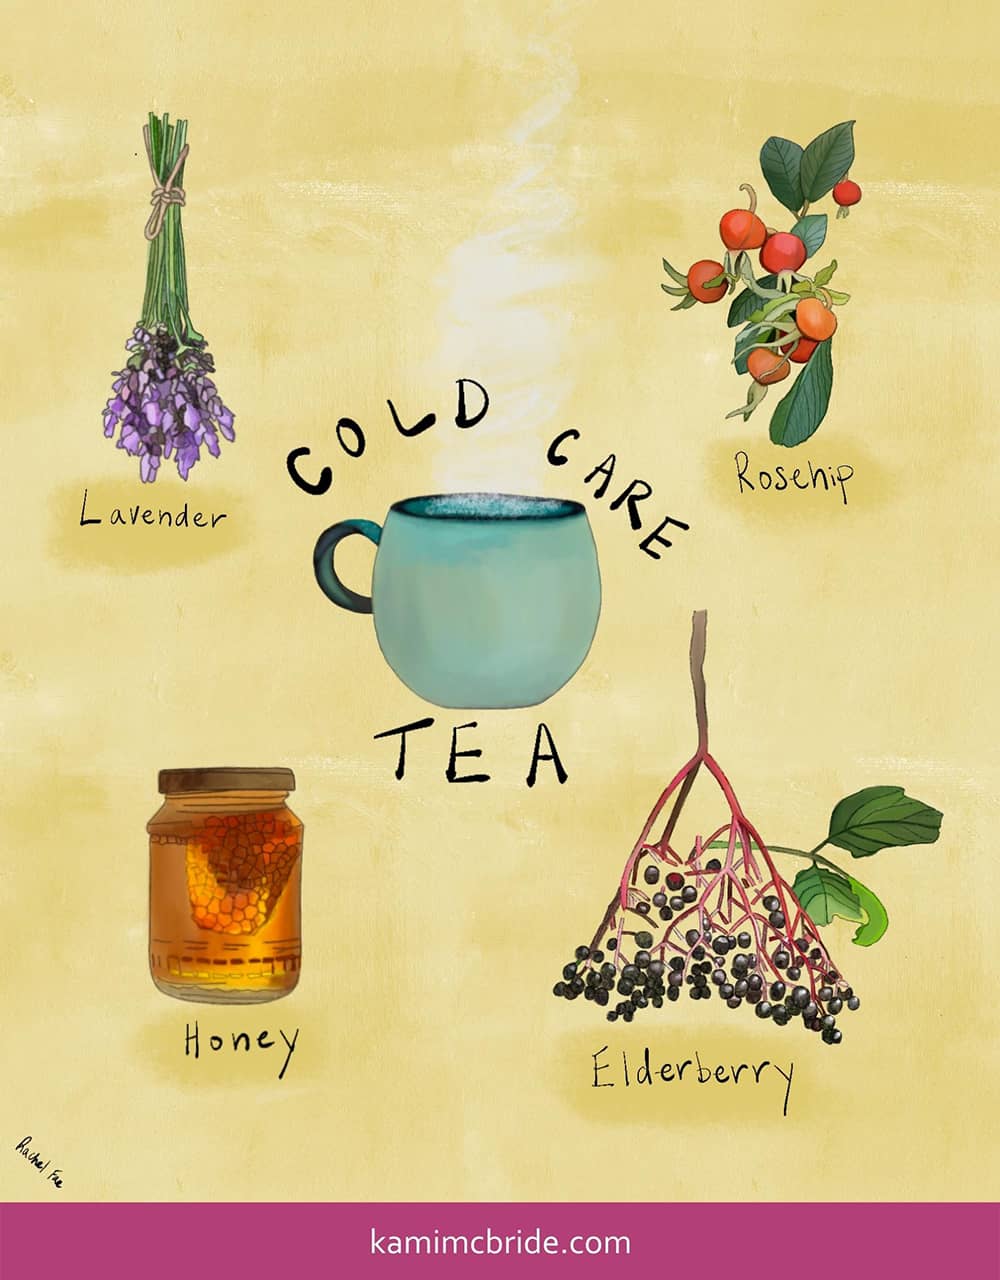 cold care tea recipe